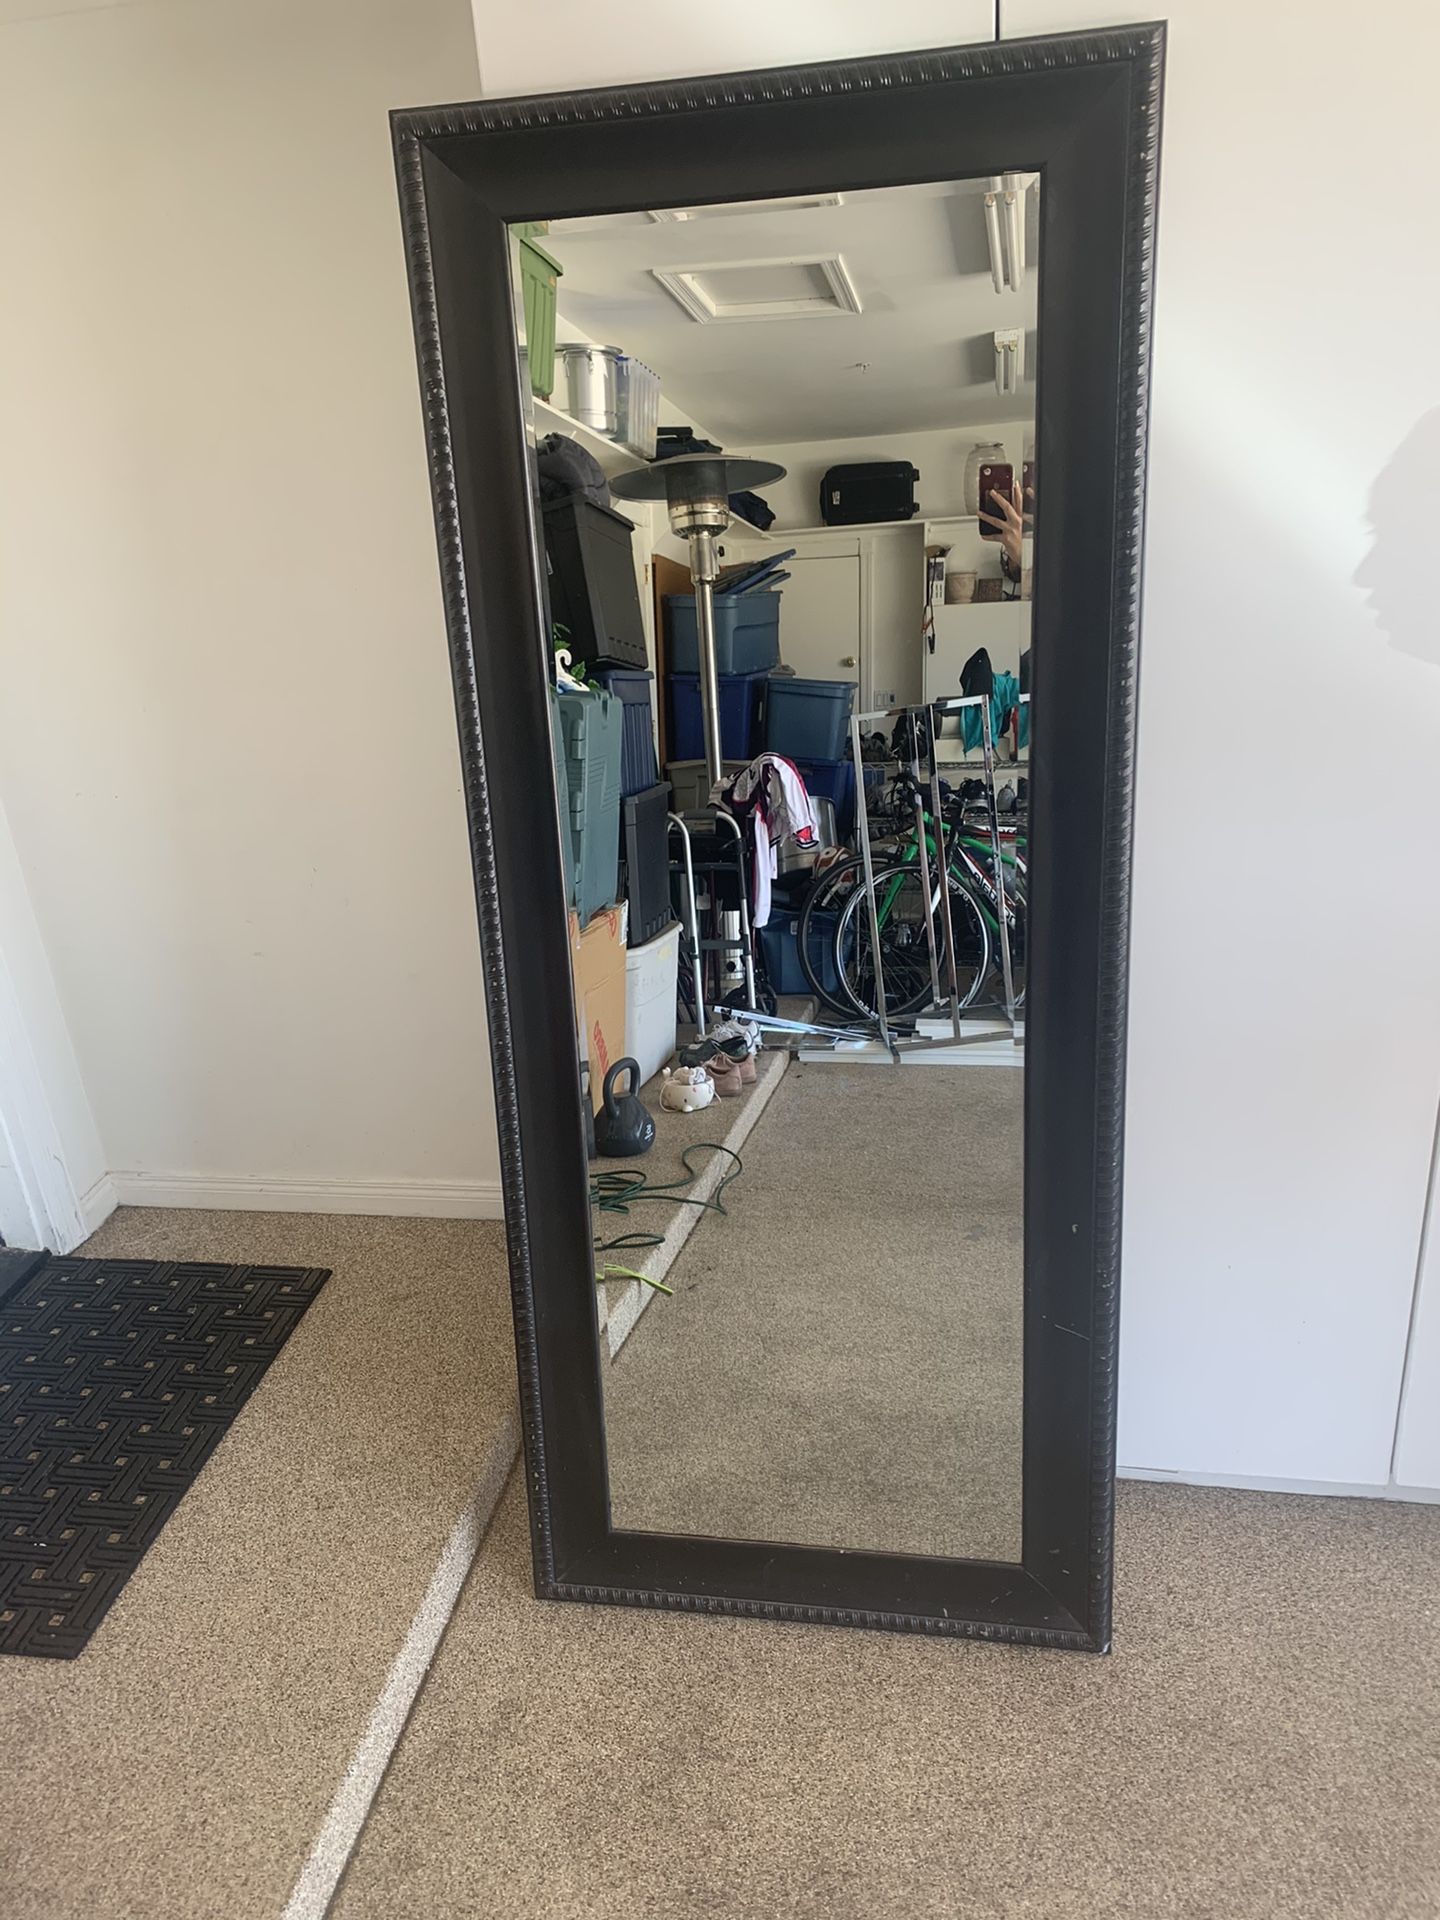 Full size mirror